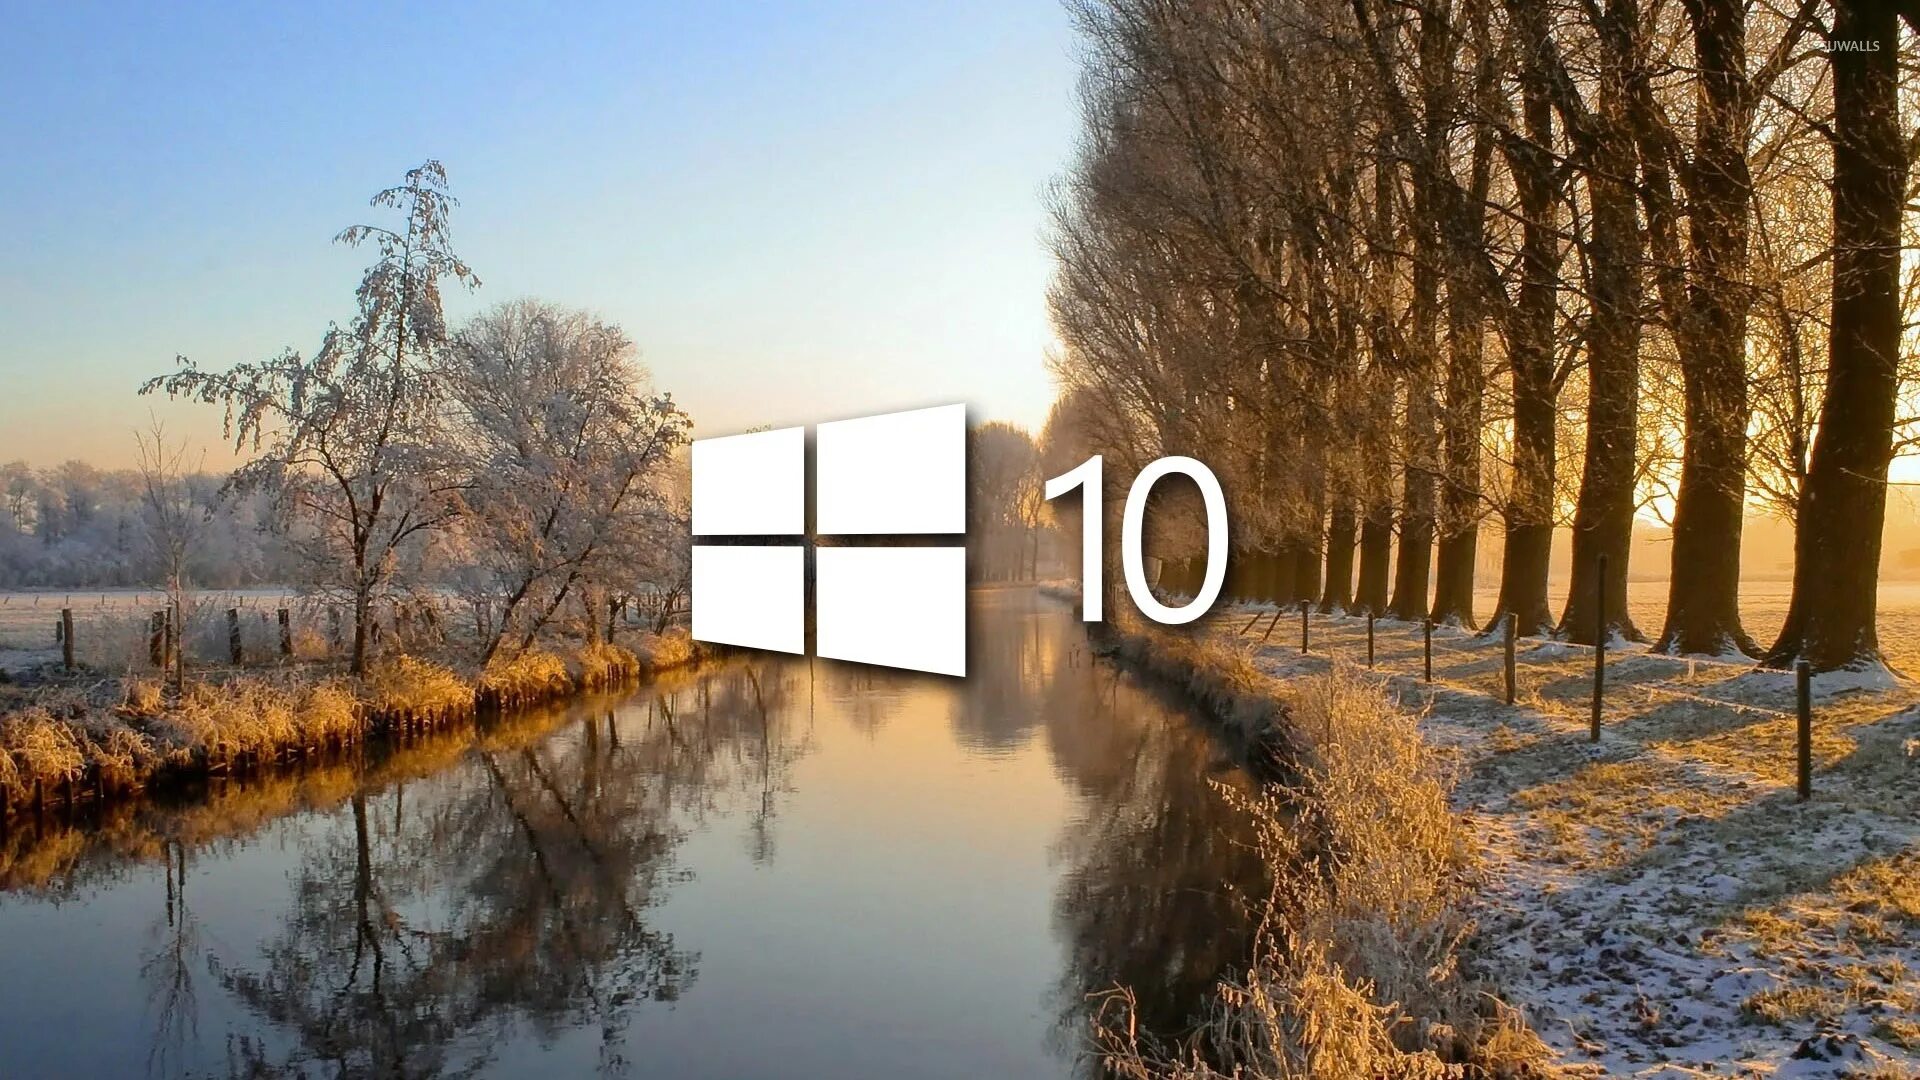 Картинки виндовс 10. Фото виндовс 10. Обои Windows 10. Обои на рабочий стол Windows 10. Картинка для фона рабочего стола Windows 10.